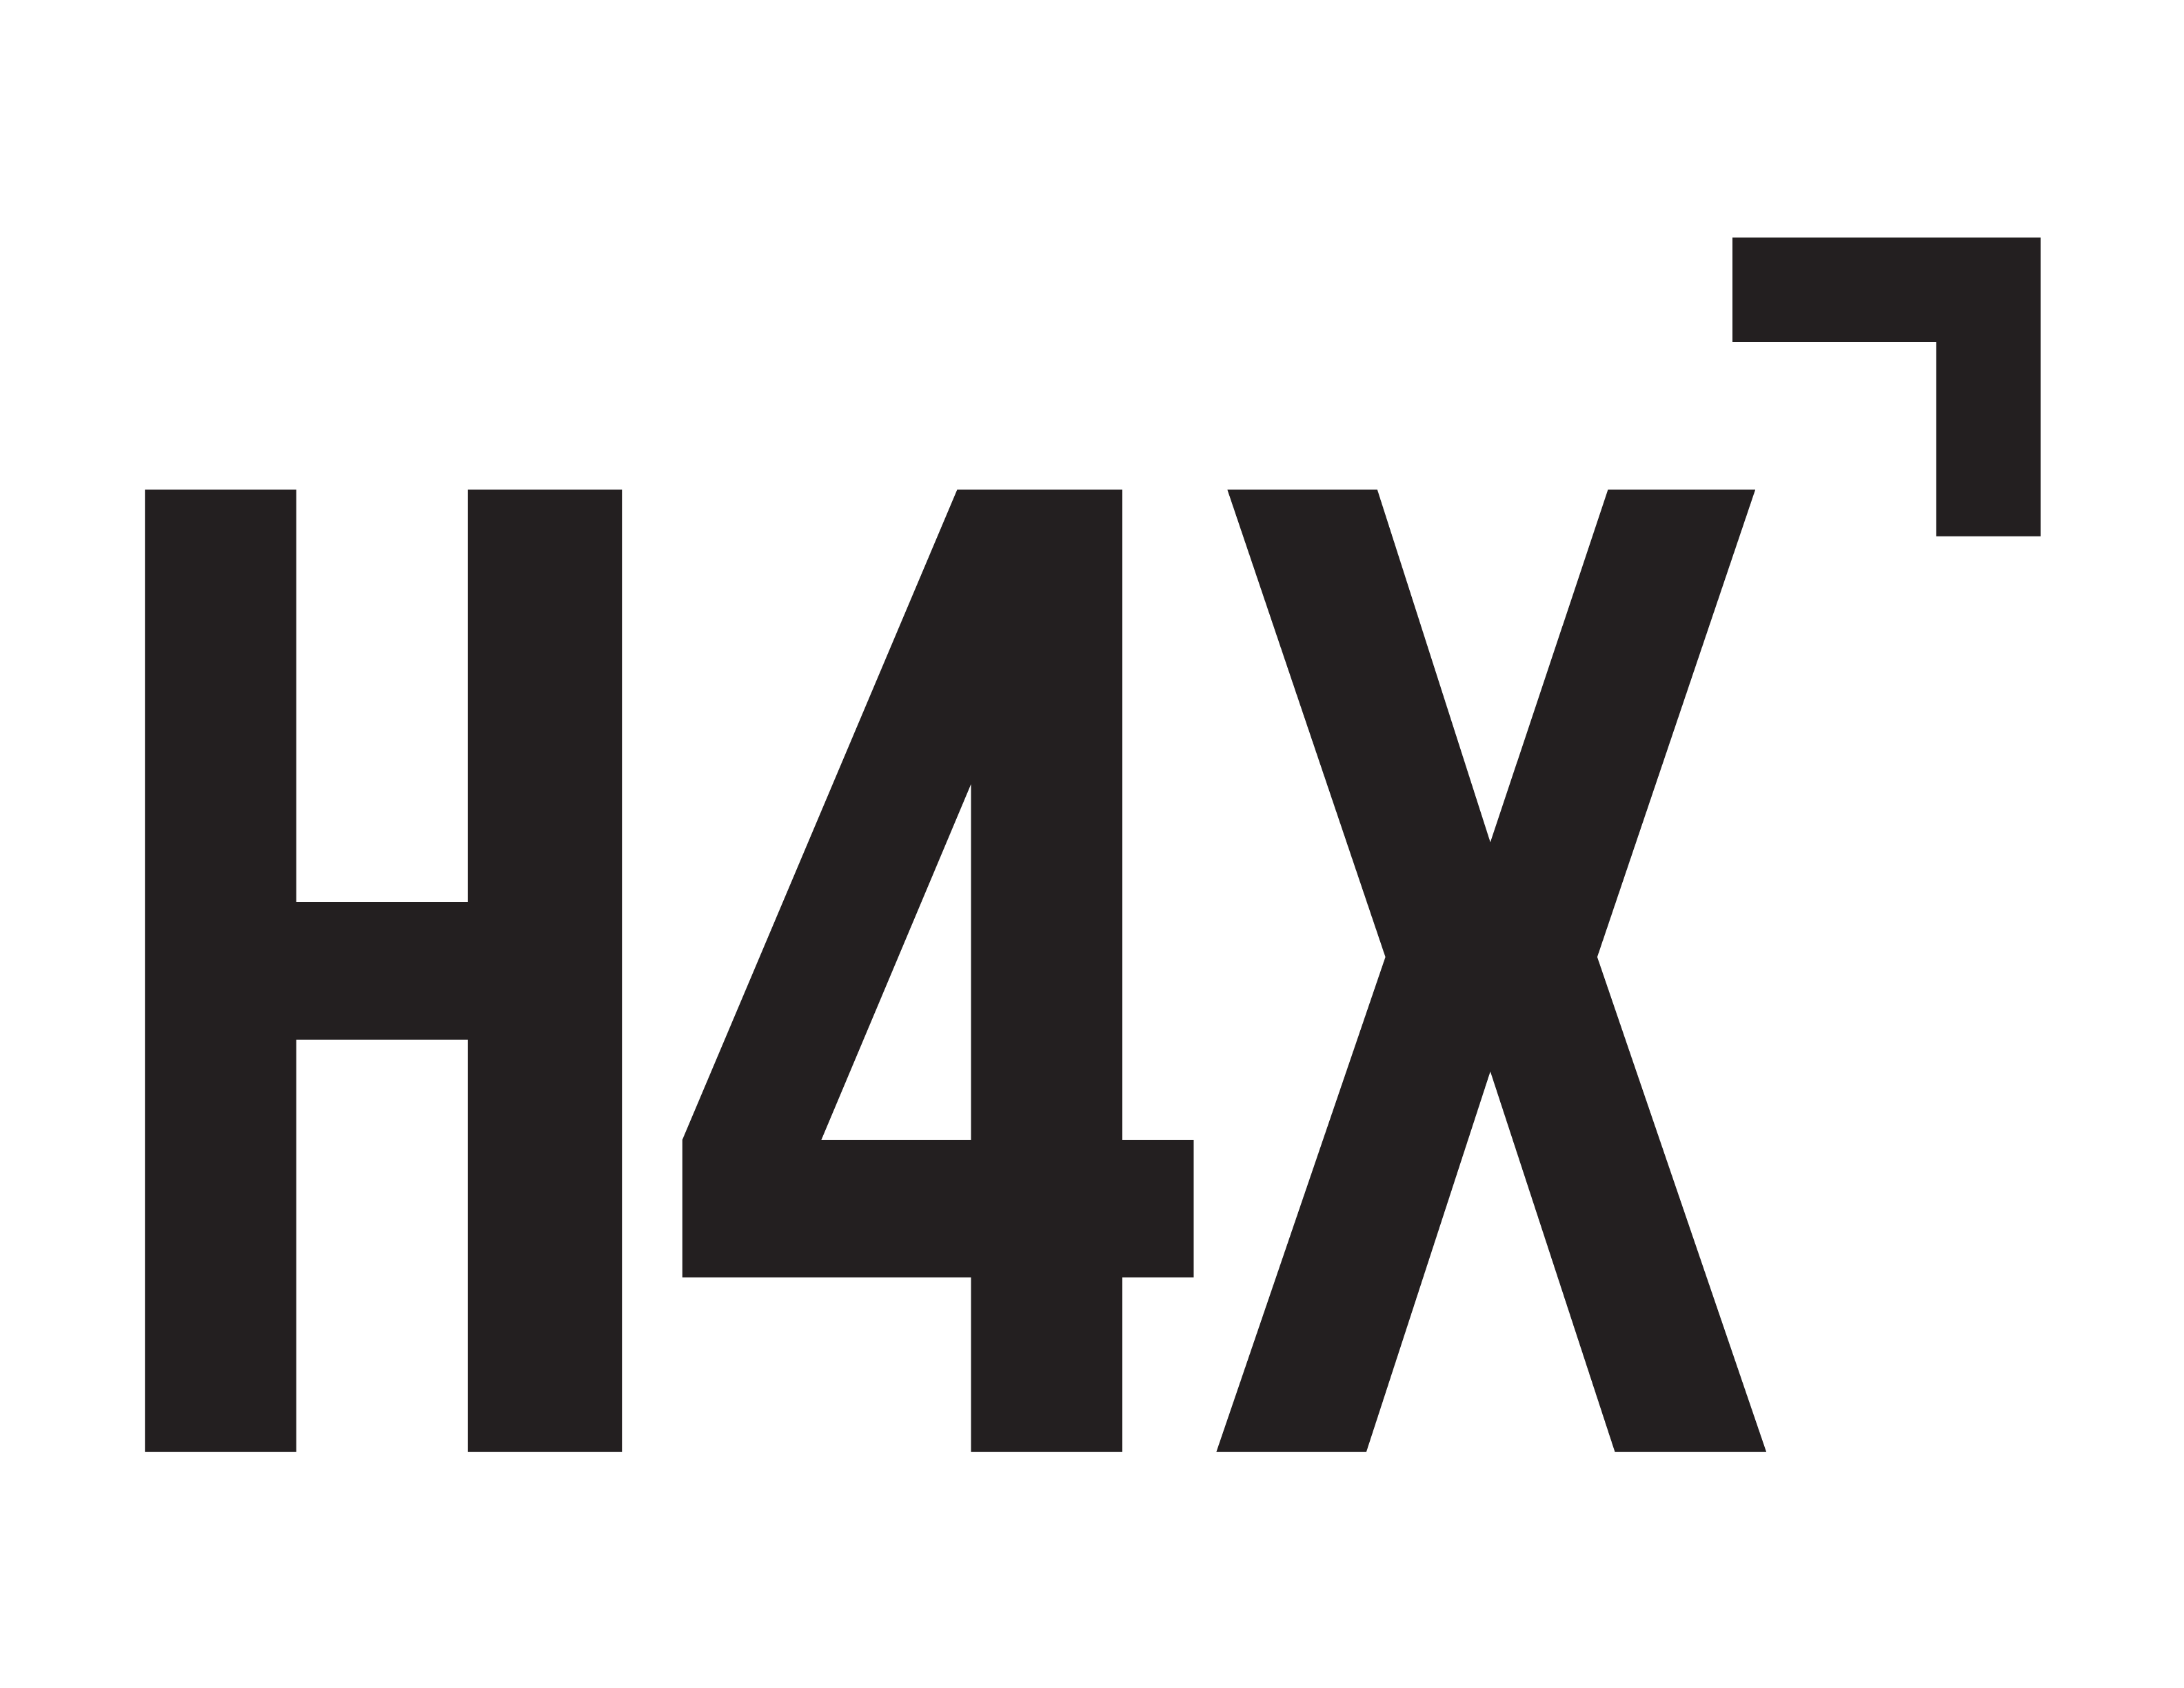 H4X - Roblox